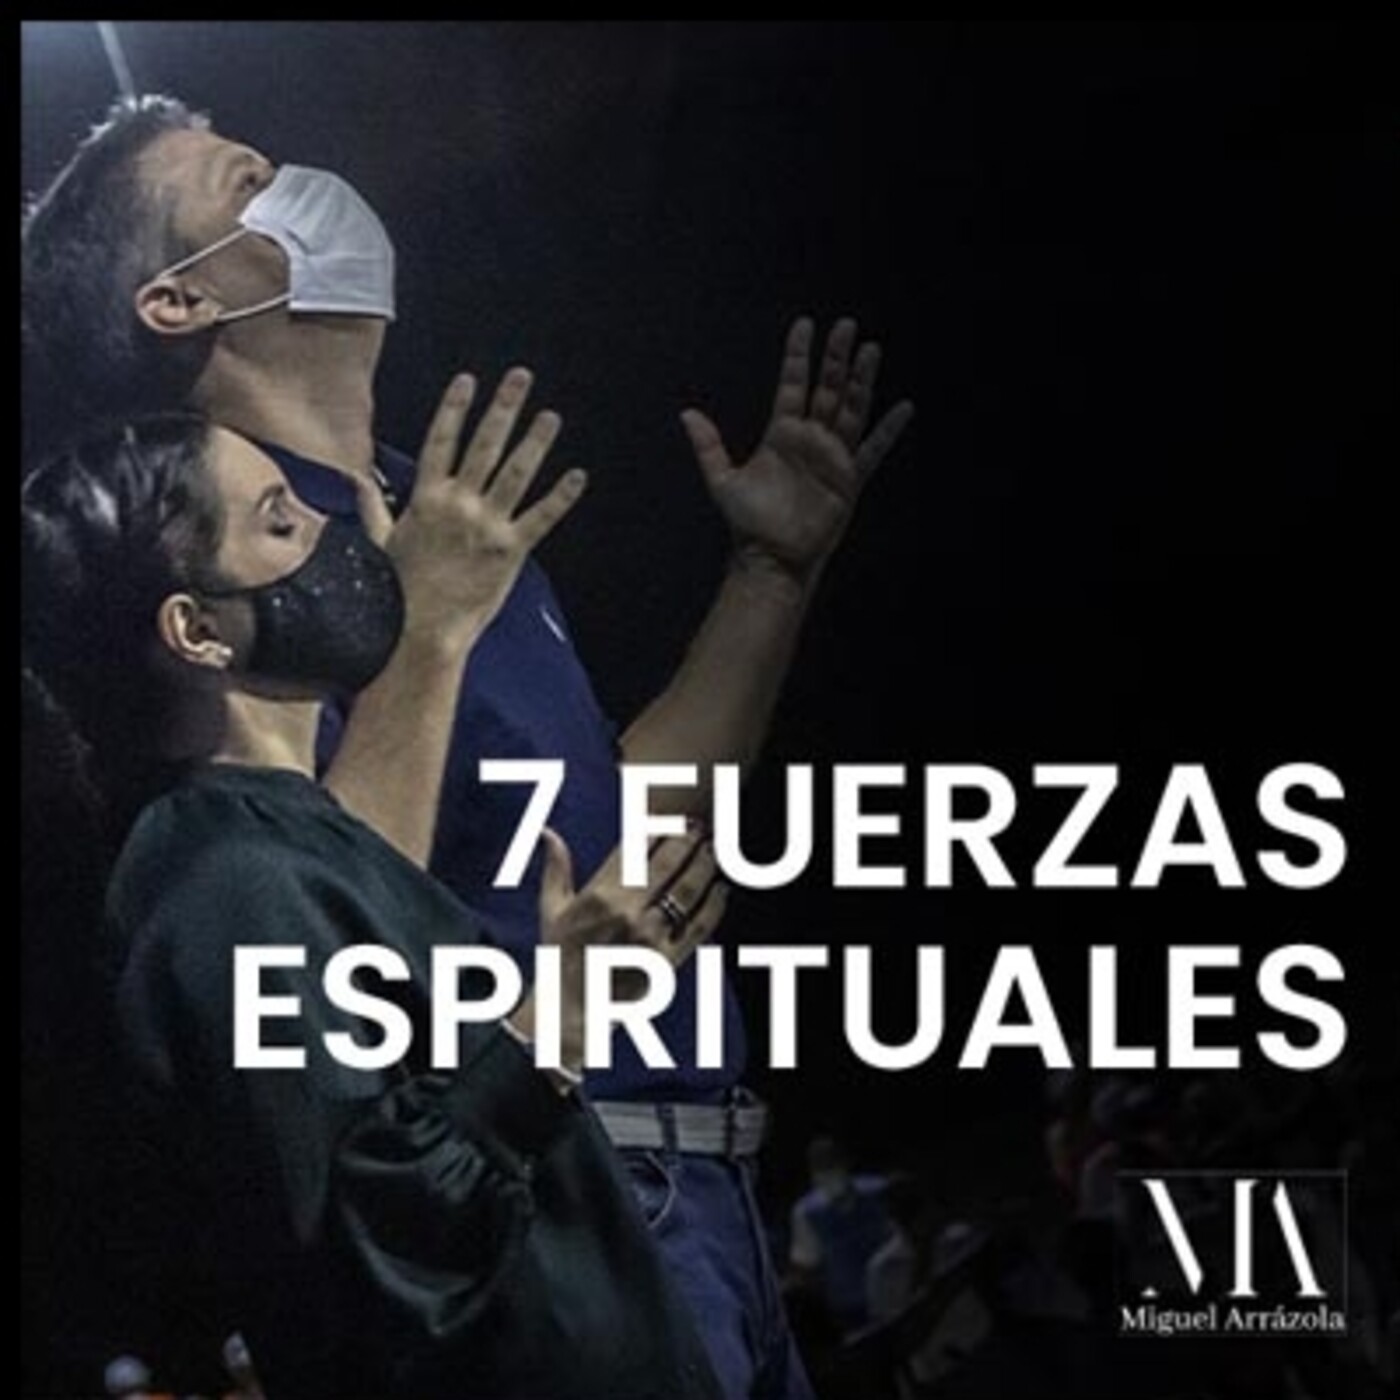 7 Fuerzas Espirituales